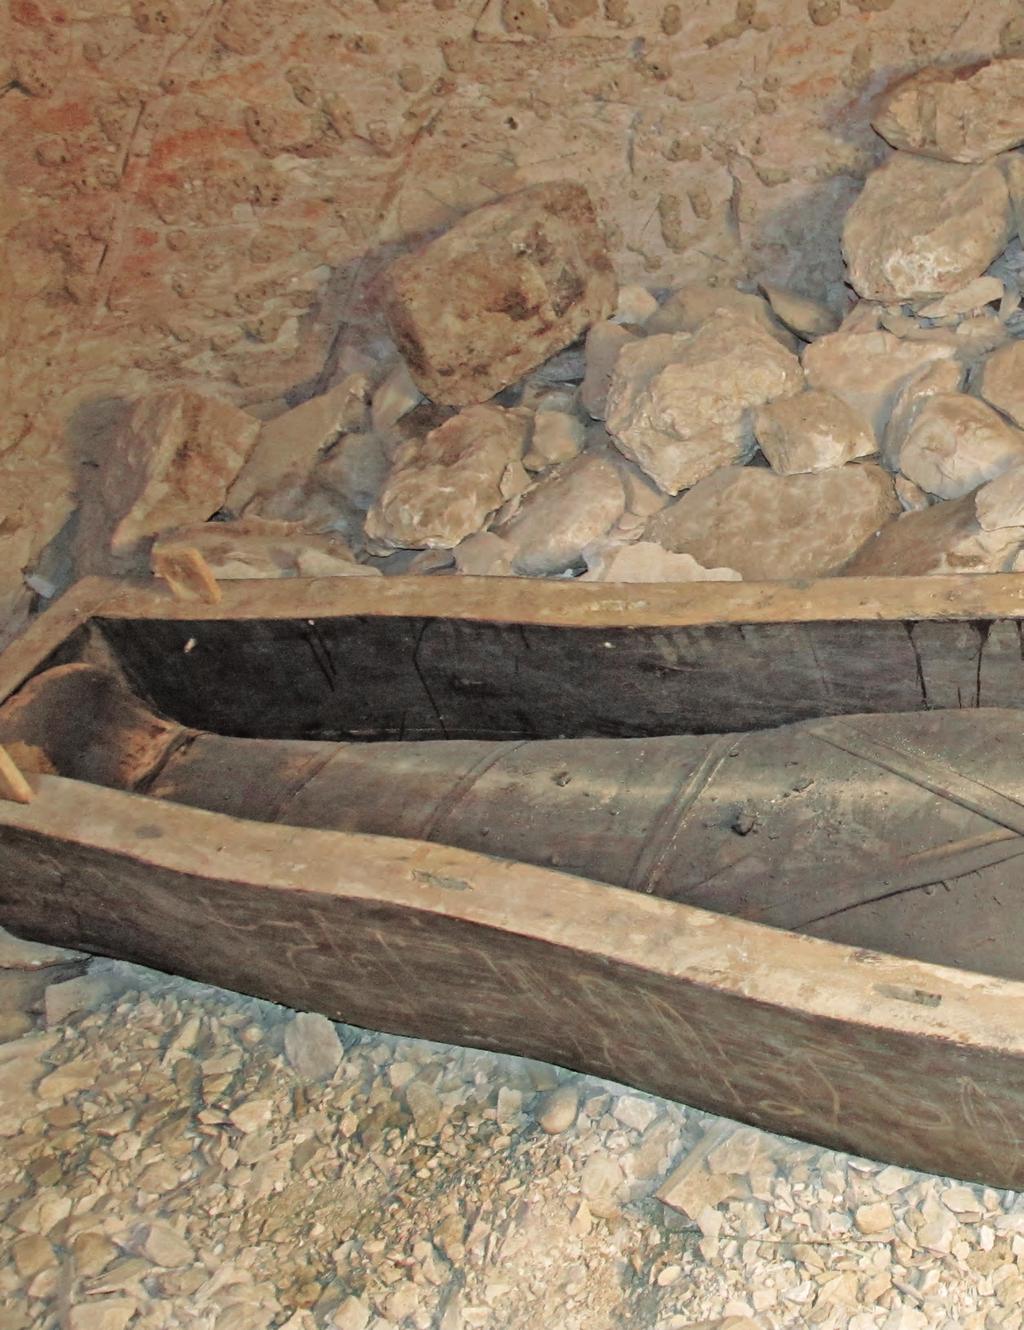 The in situ undisturbed mummy of